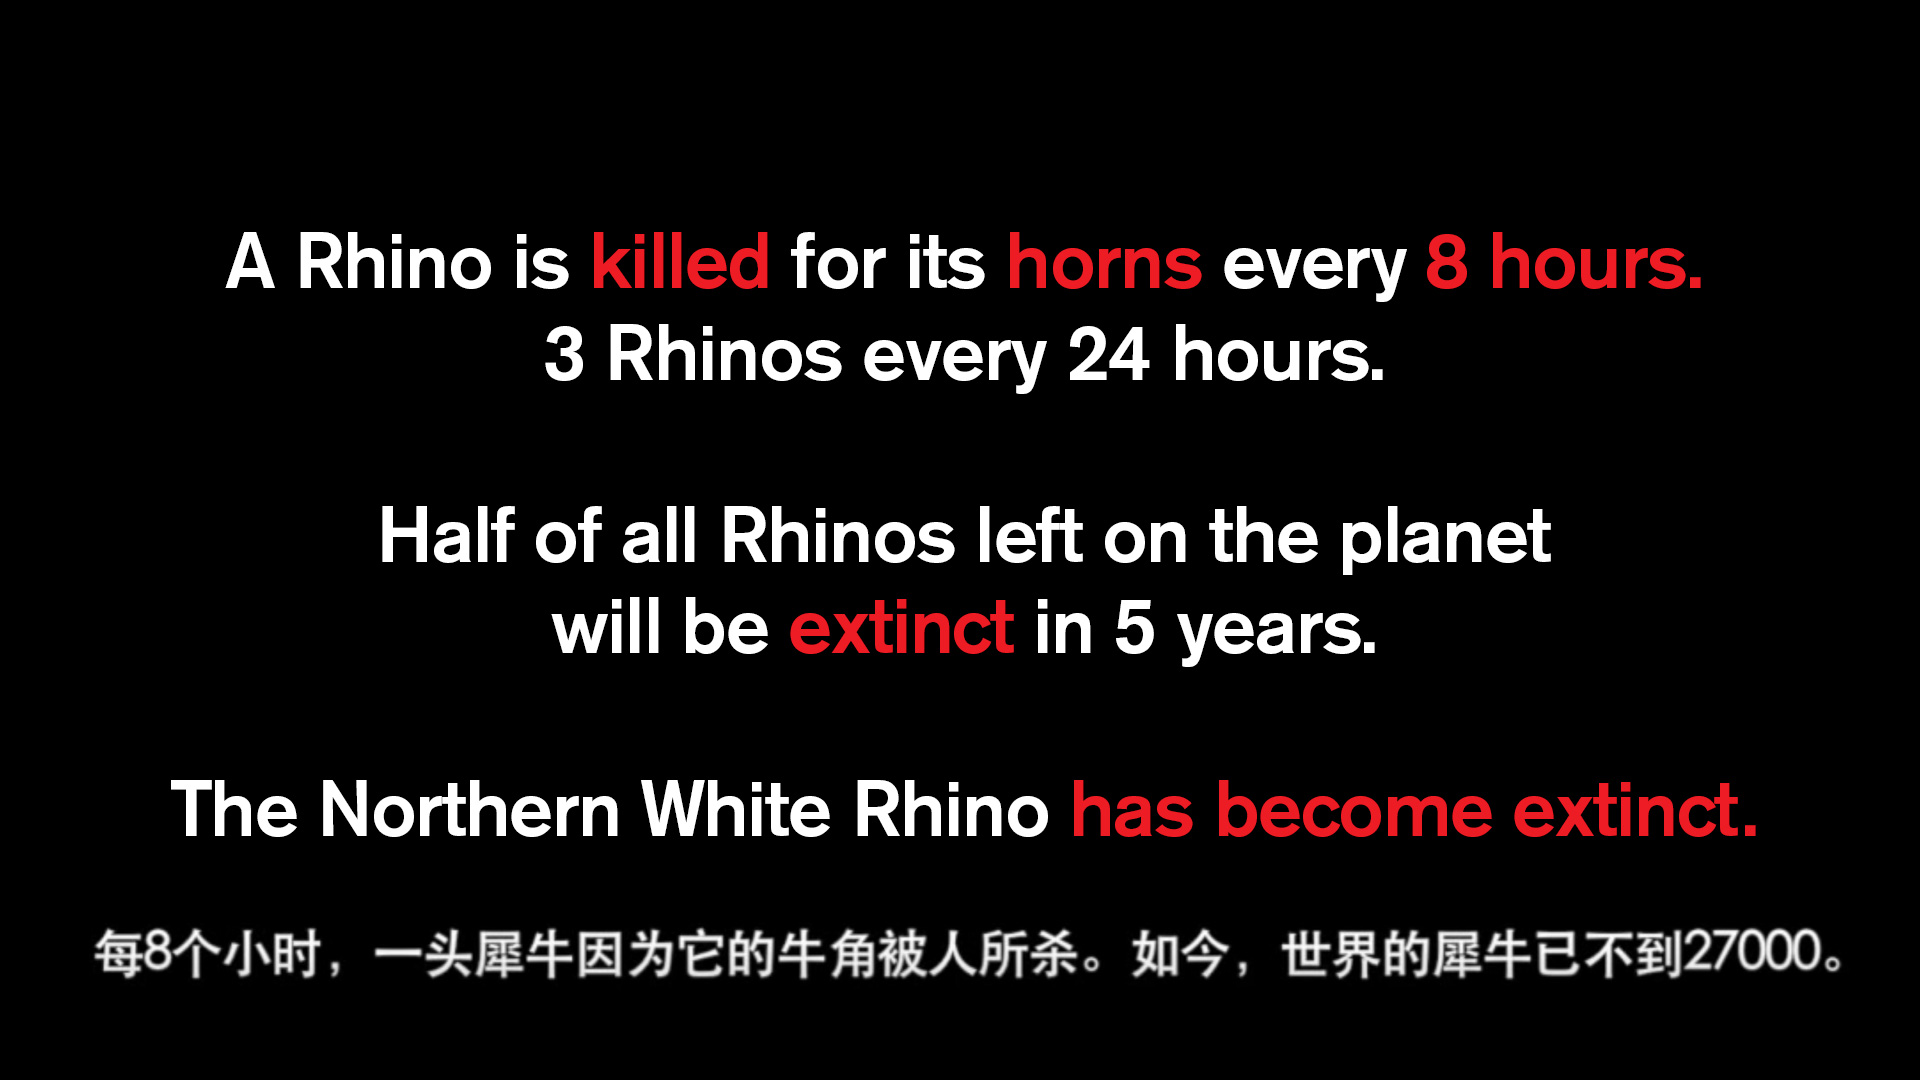 Rhinos-every-8-hours-3-a-day.jpg